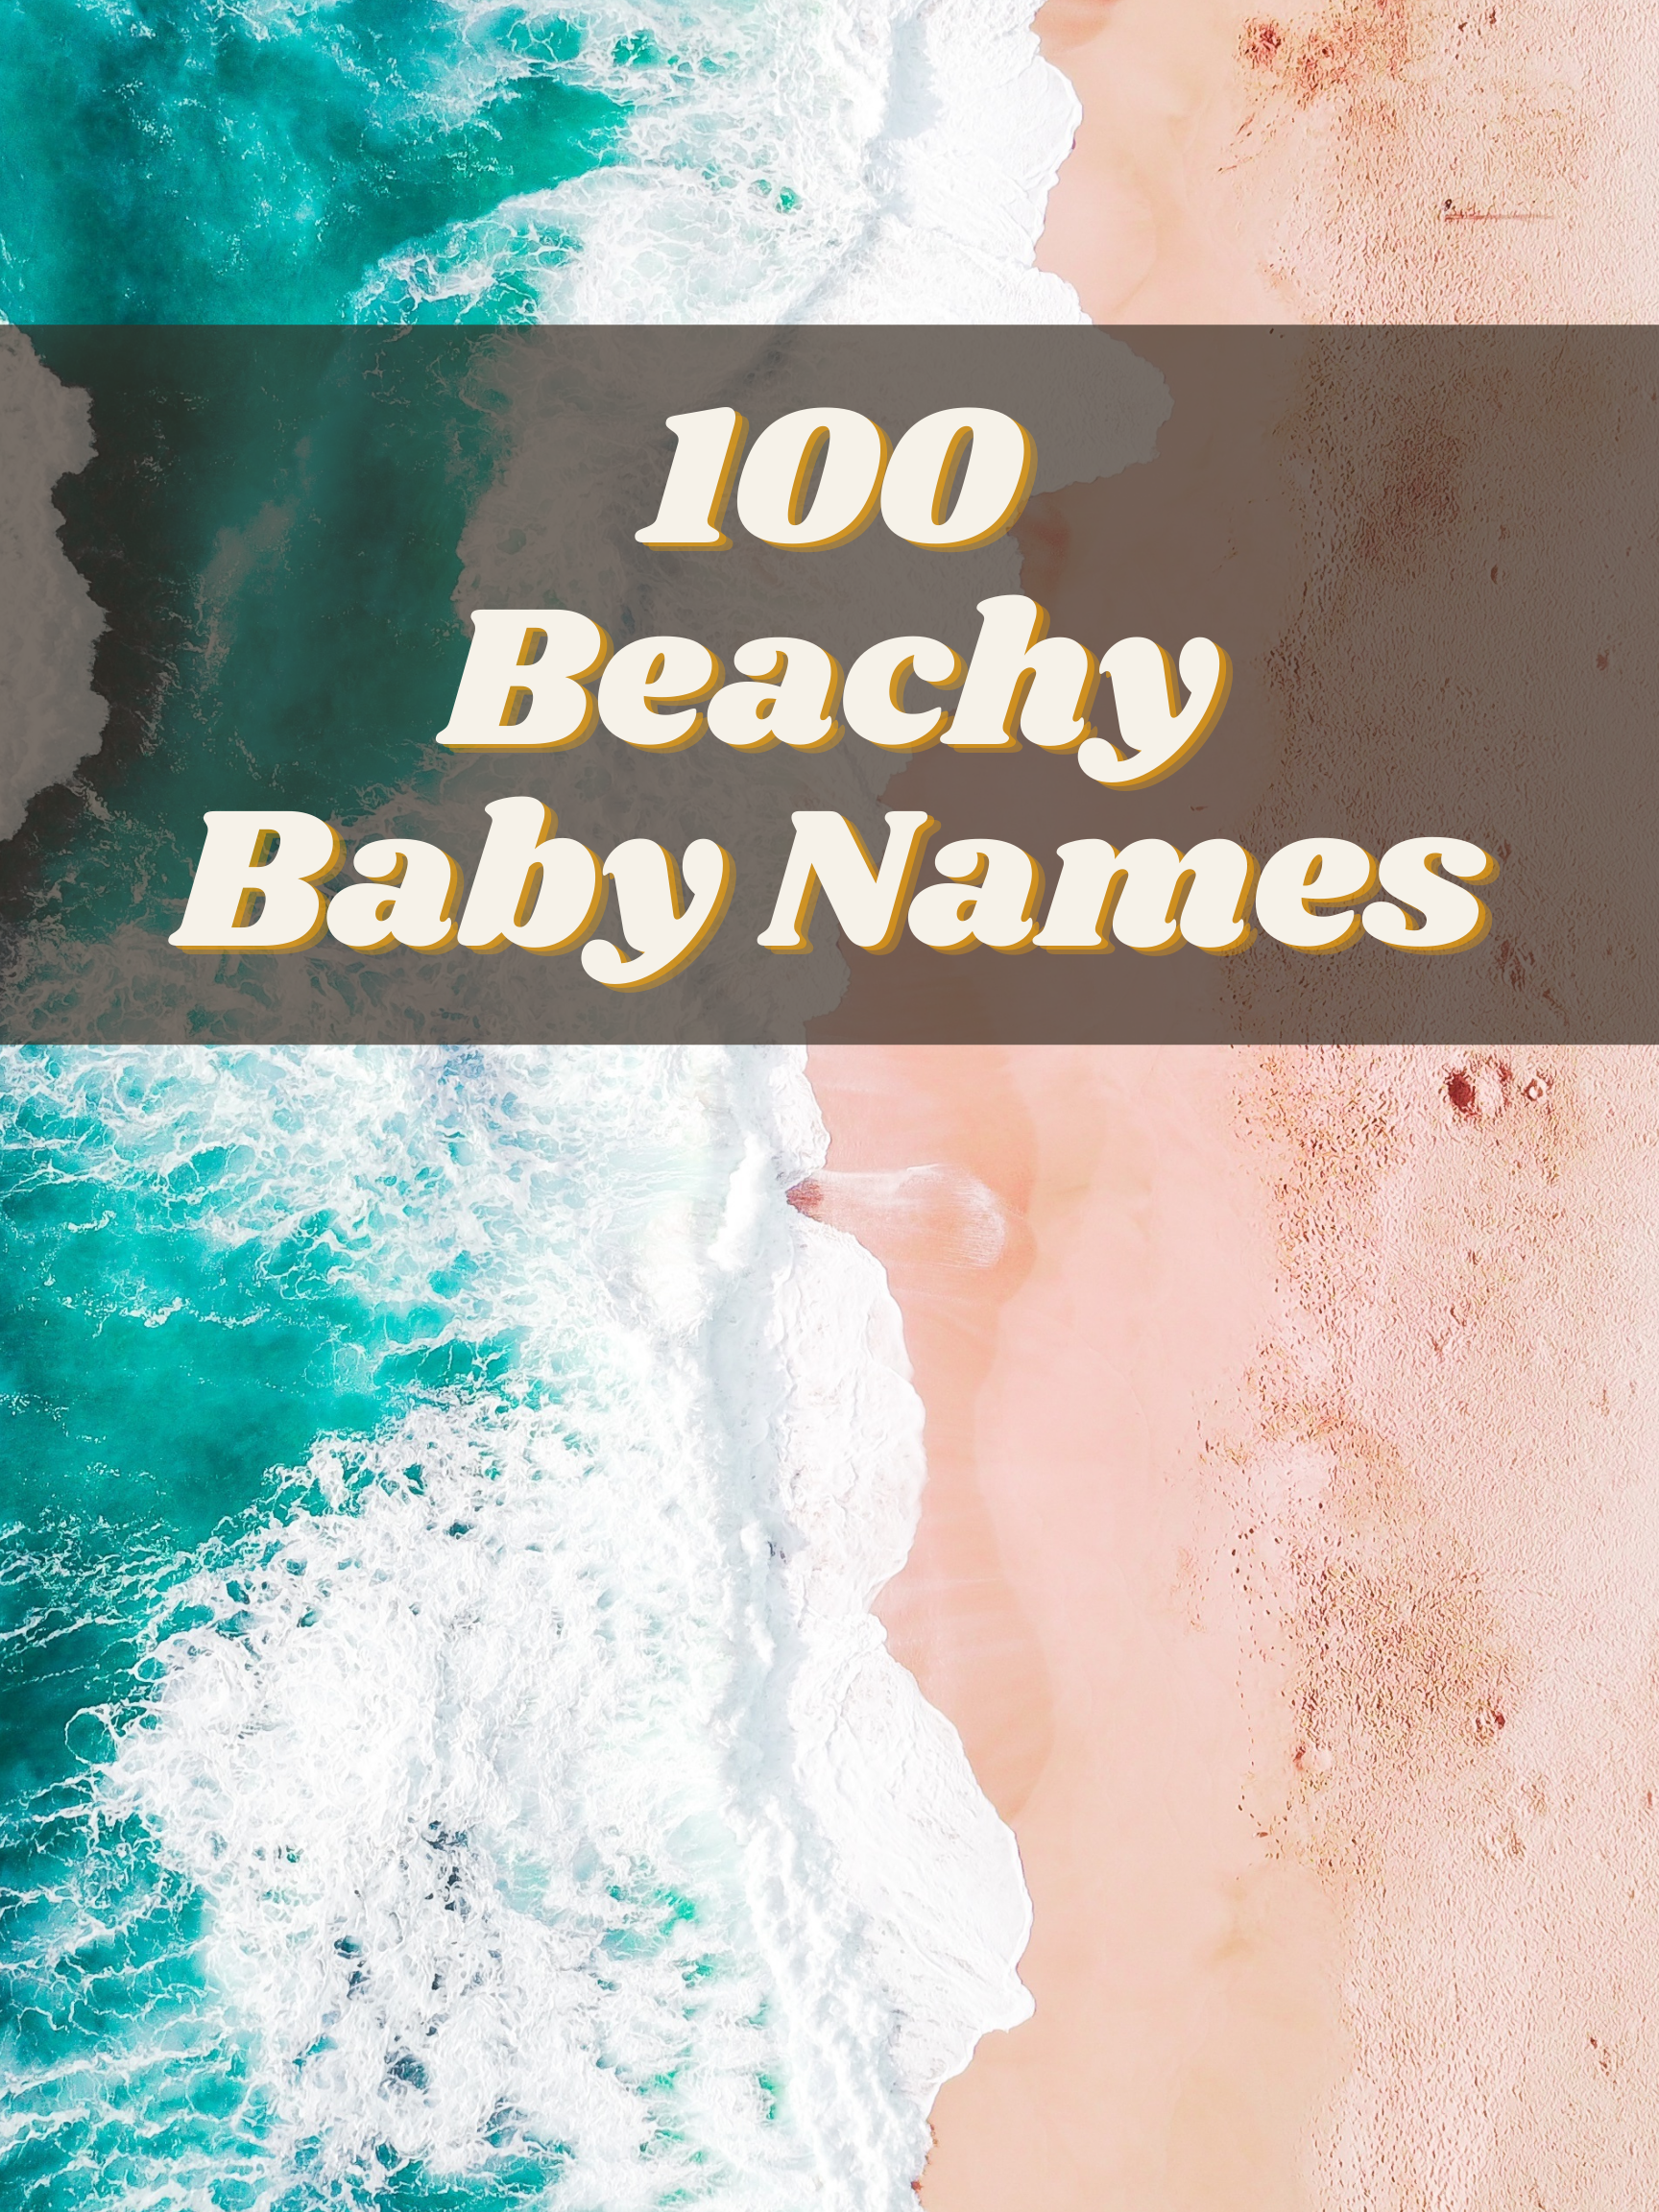 100 Beachy Baby Names